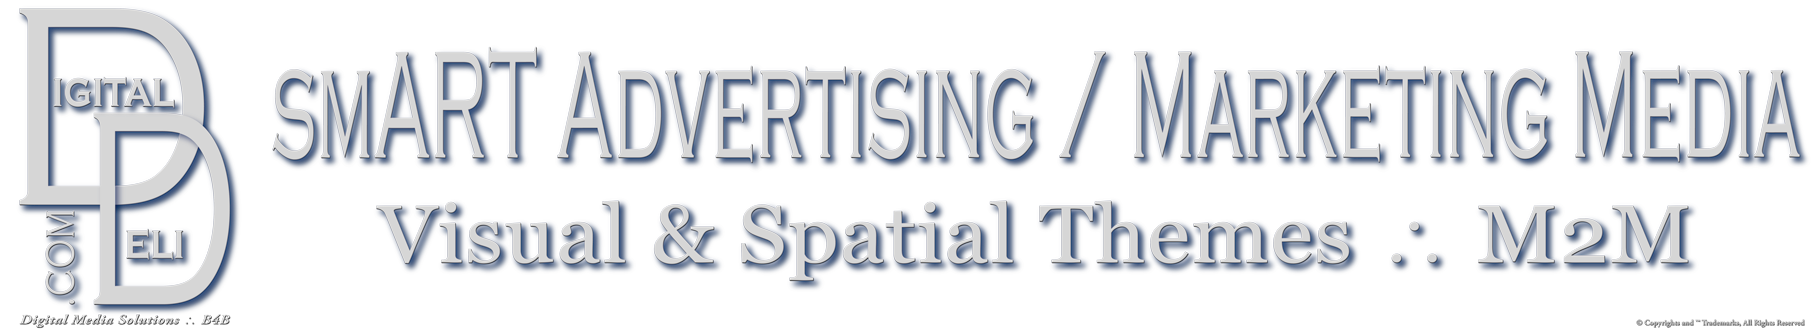 DigitalDeli.com Properties & Brands Imprint, smART Advertising / Marketing Media